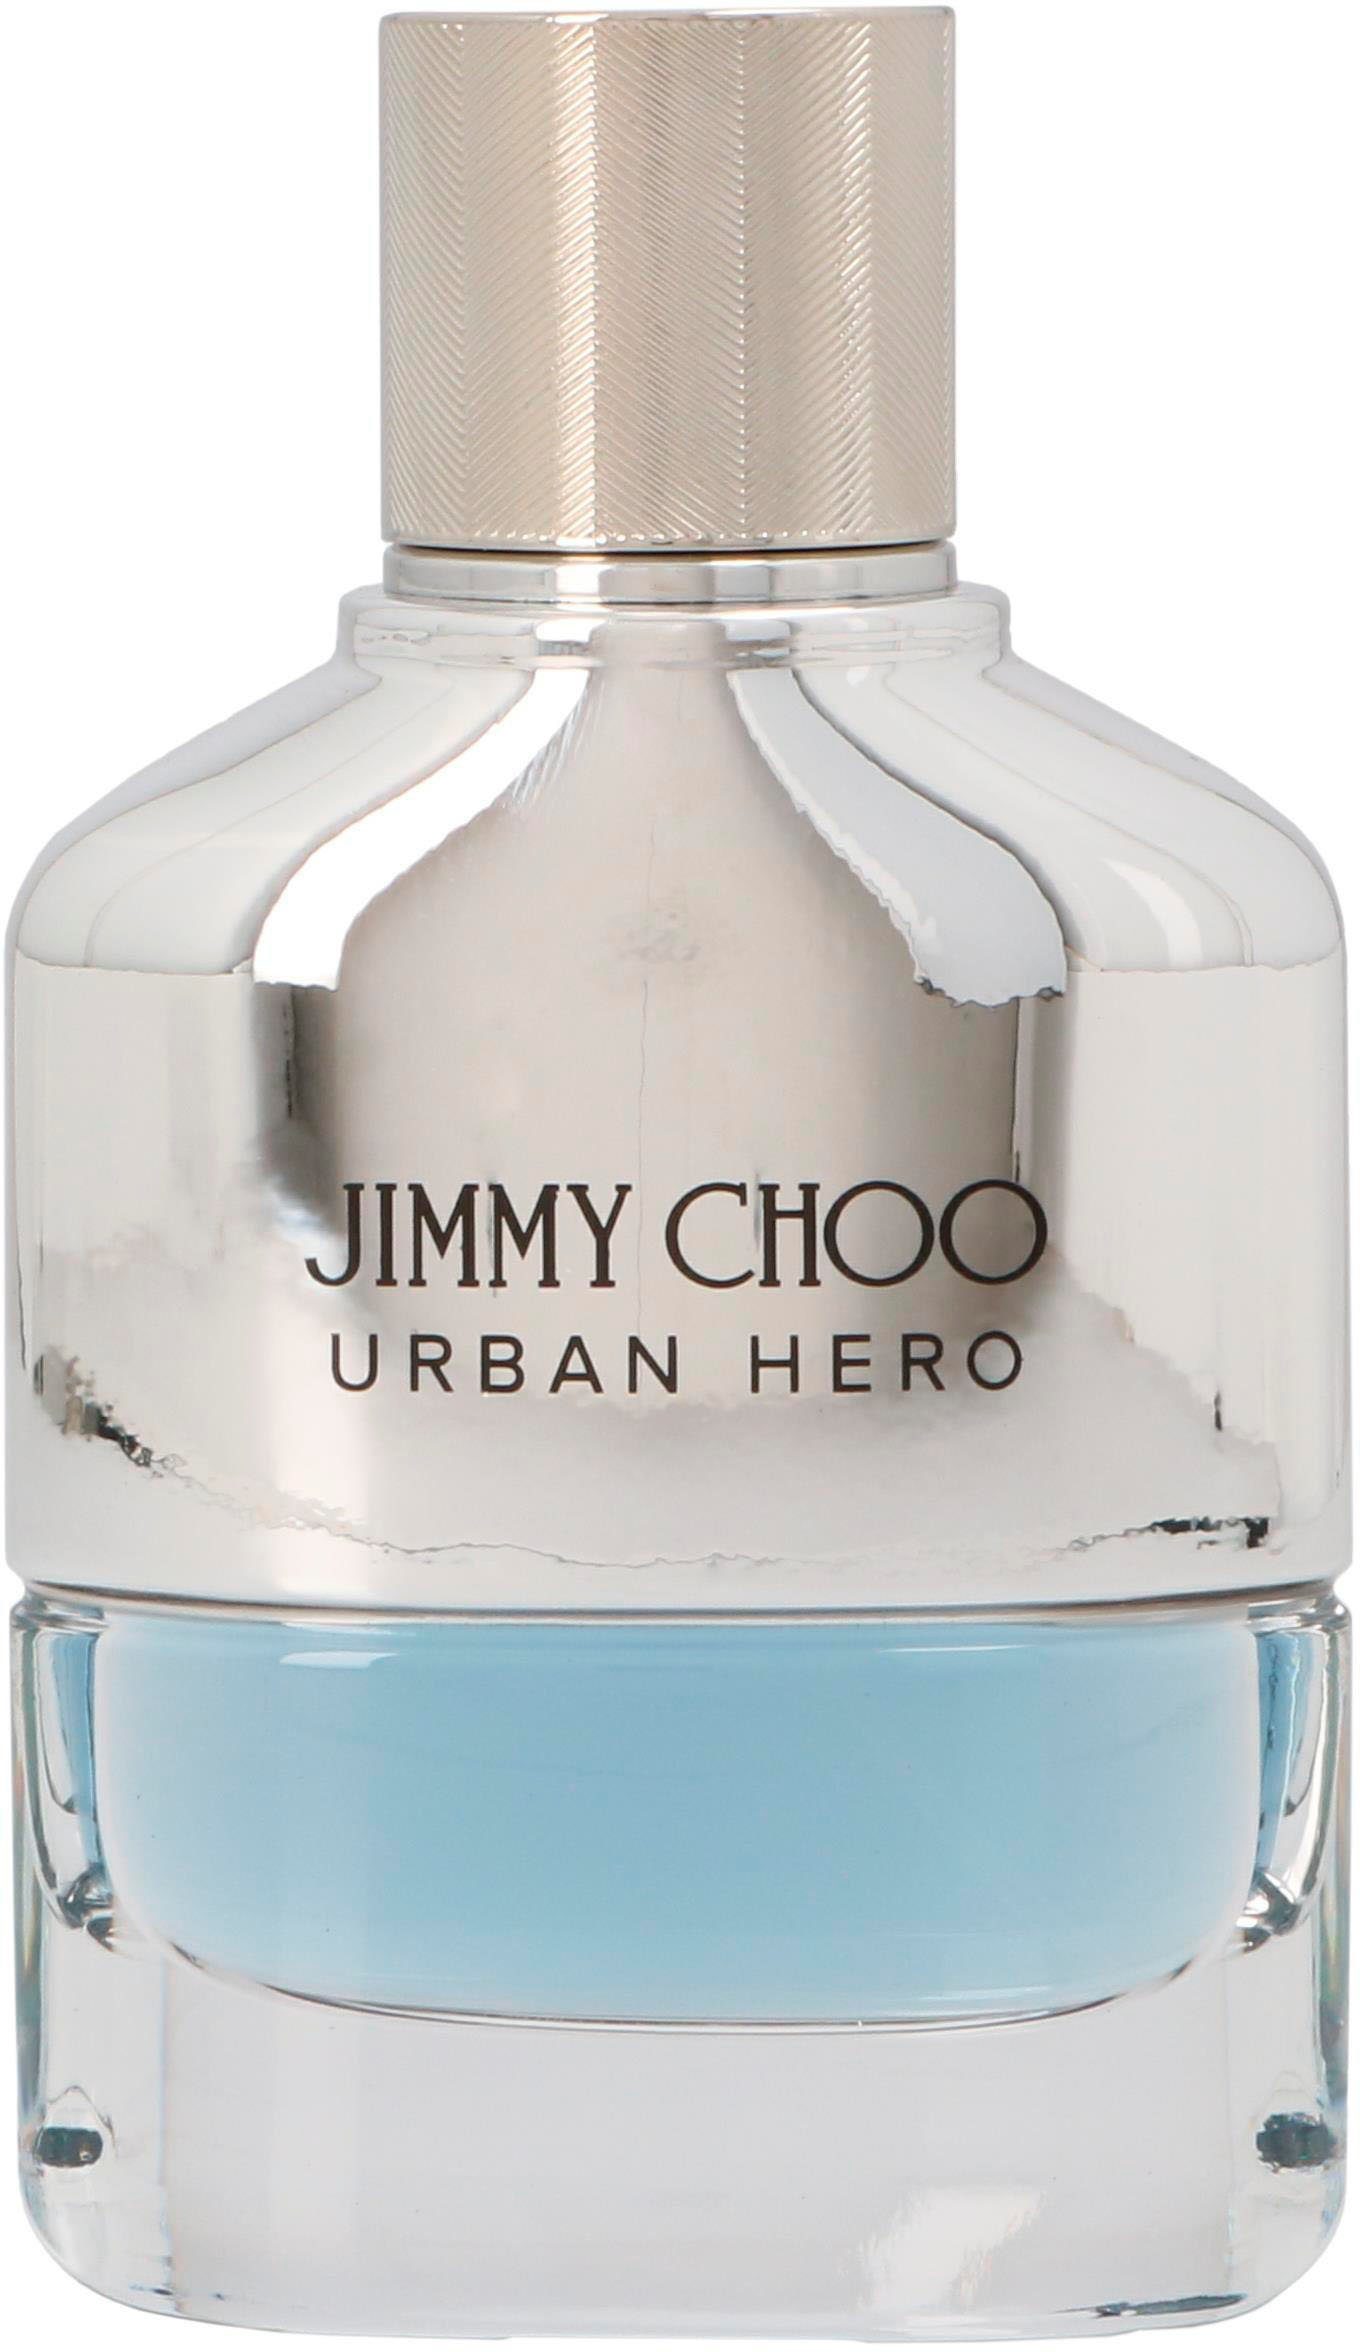 Eau CHOO Urban Parfum JIMMY Hero de